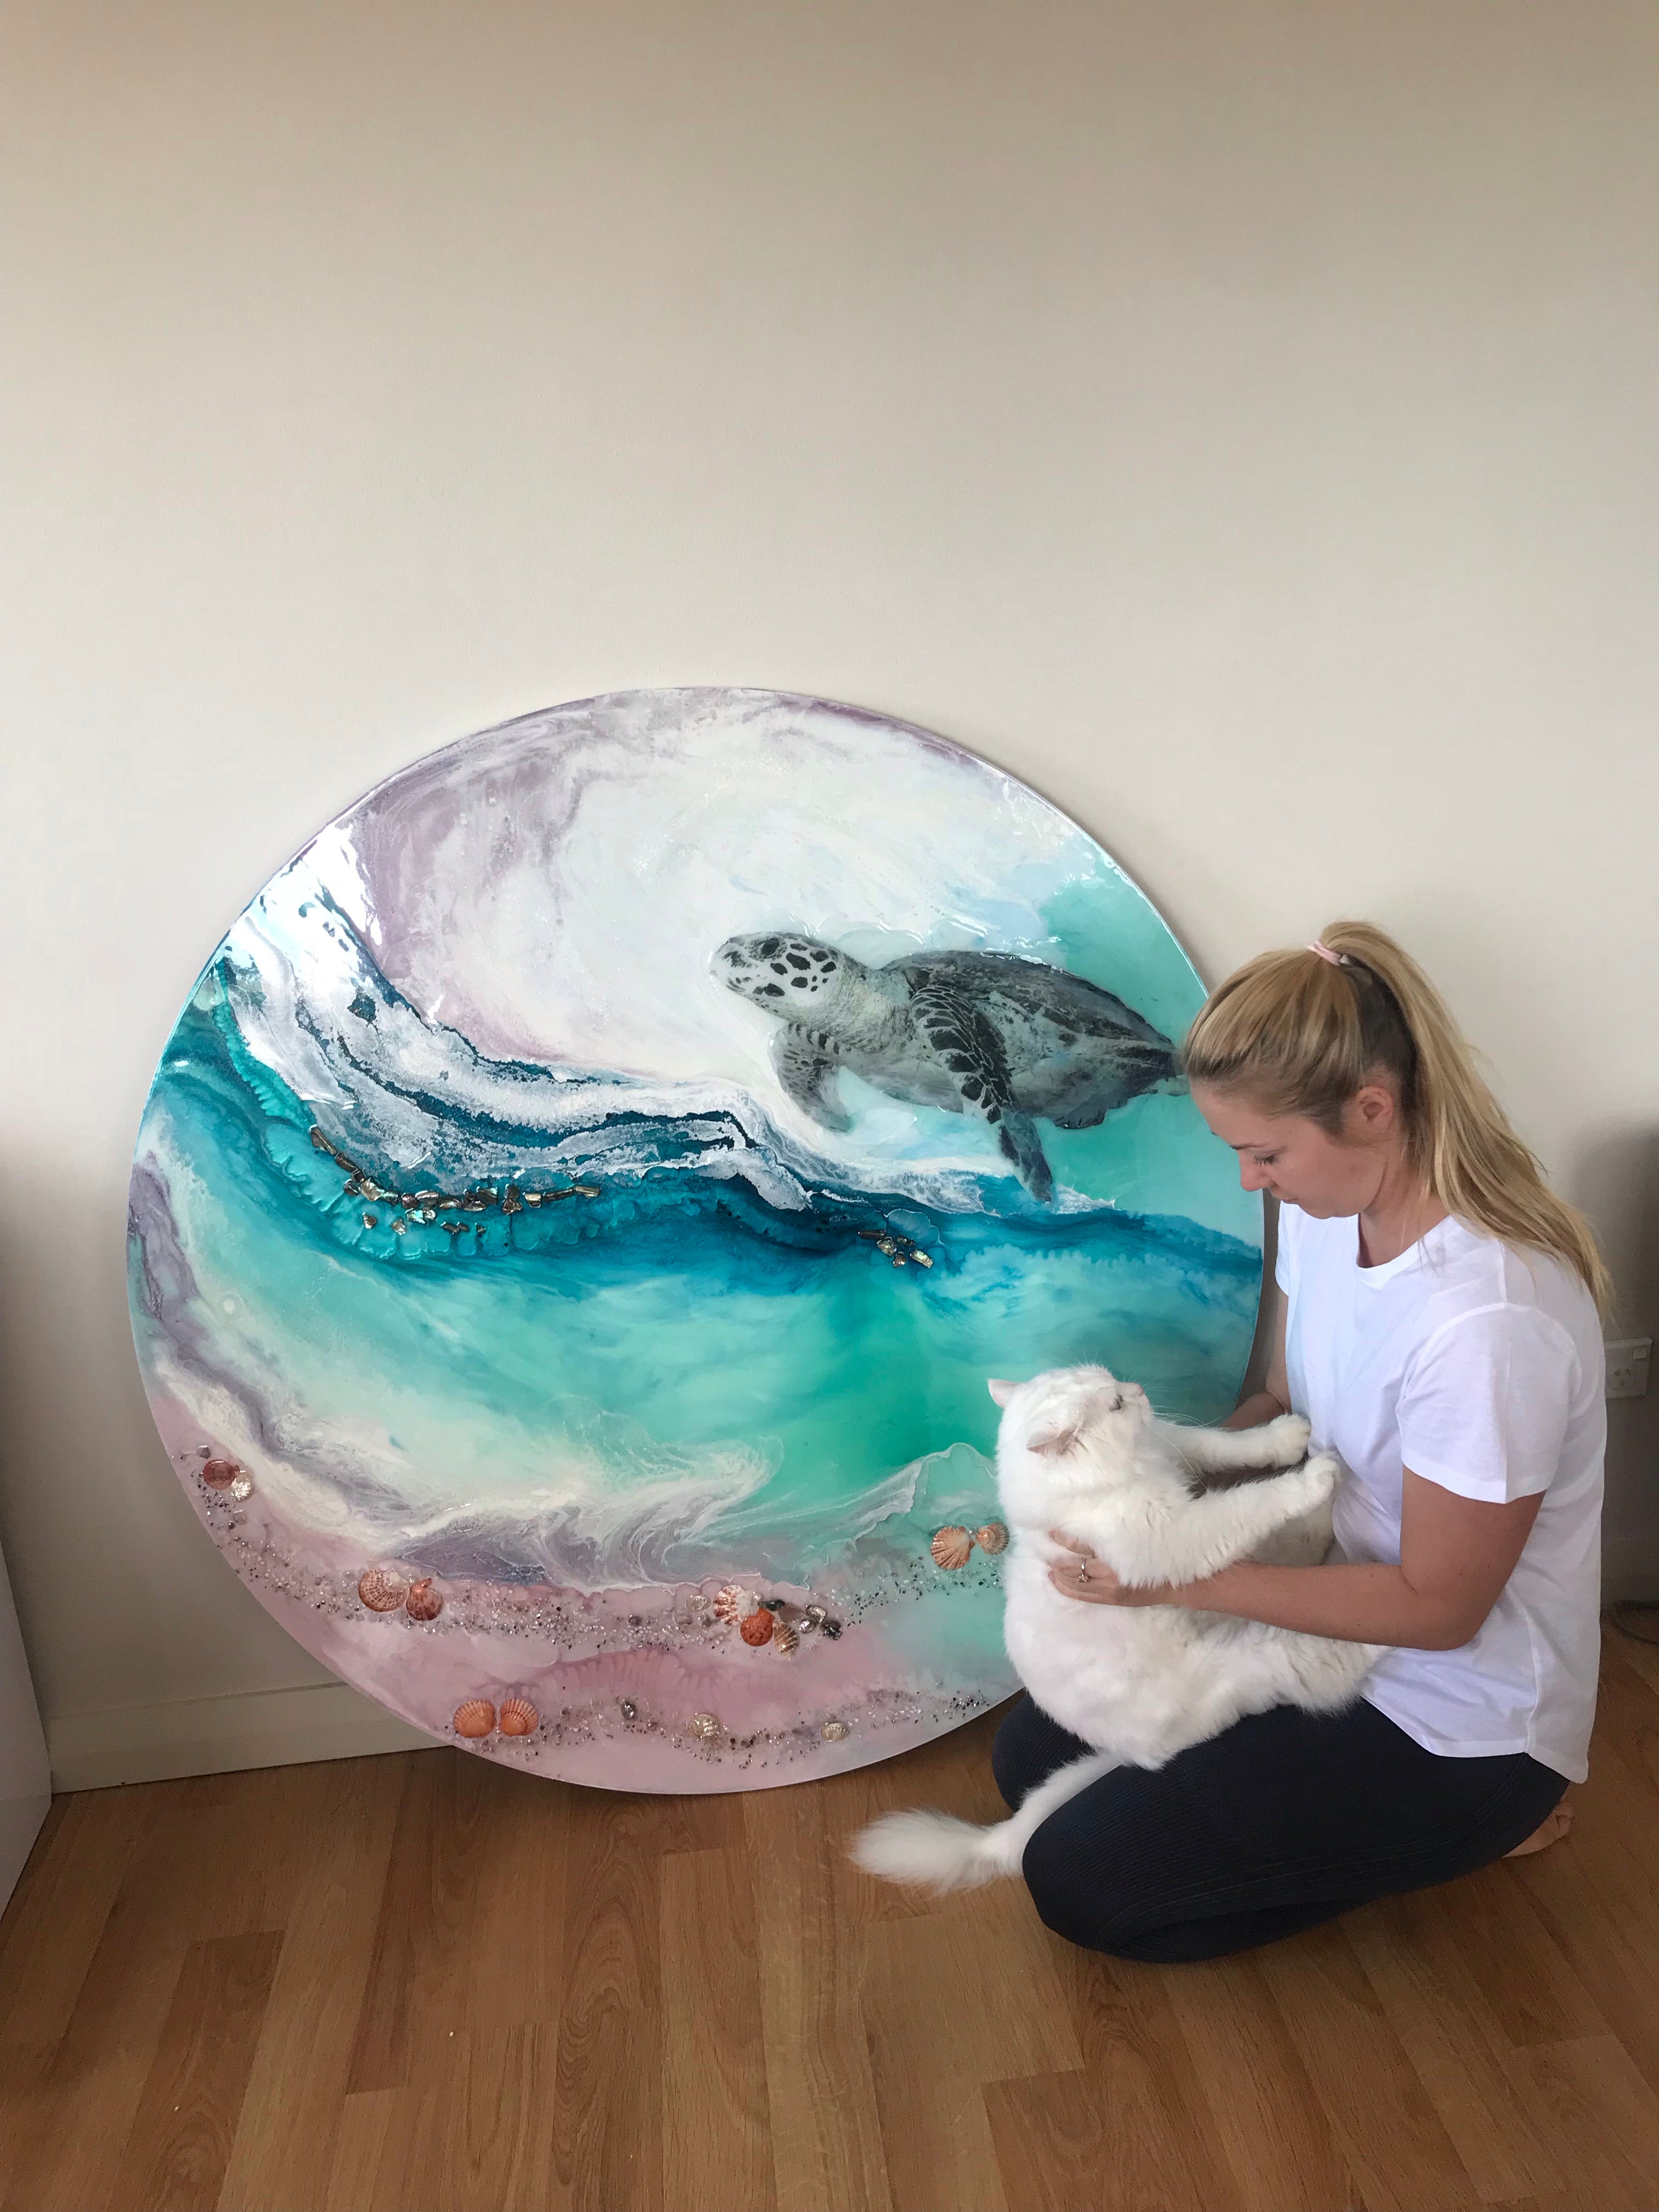 Turtle Teal Blue artwork. Abstract Coastal Artwork. Antuanelle 4 Bounty 2.0. Australian Seascape. Round